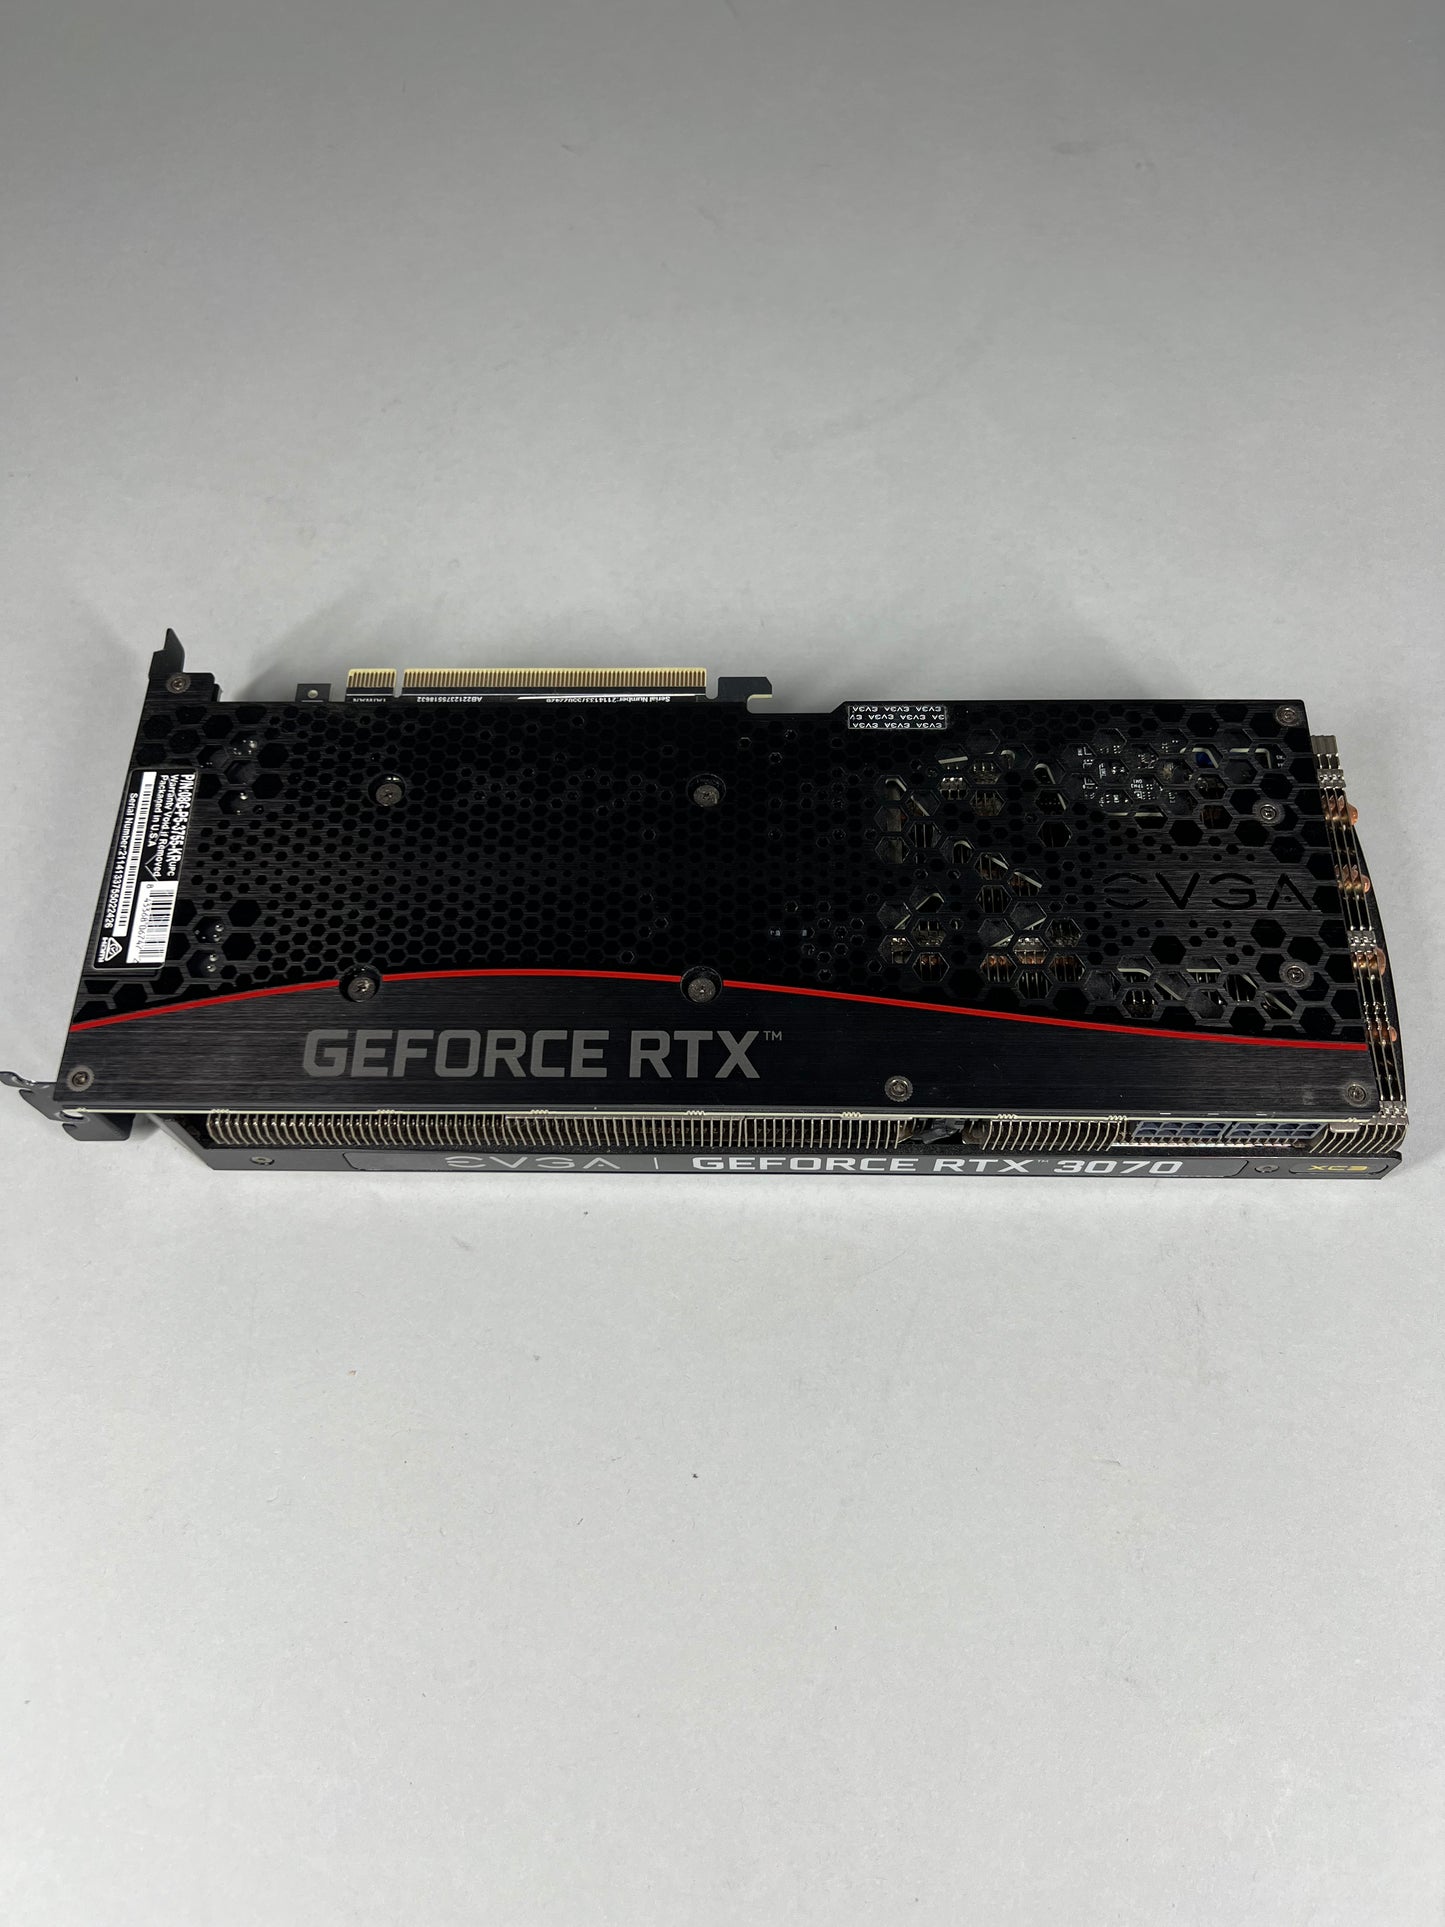 EVGA GeForce RTX 3070 XC3 ULTRA GAMING 8GB GDDR6 Graphics Card